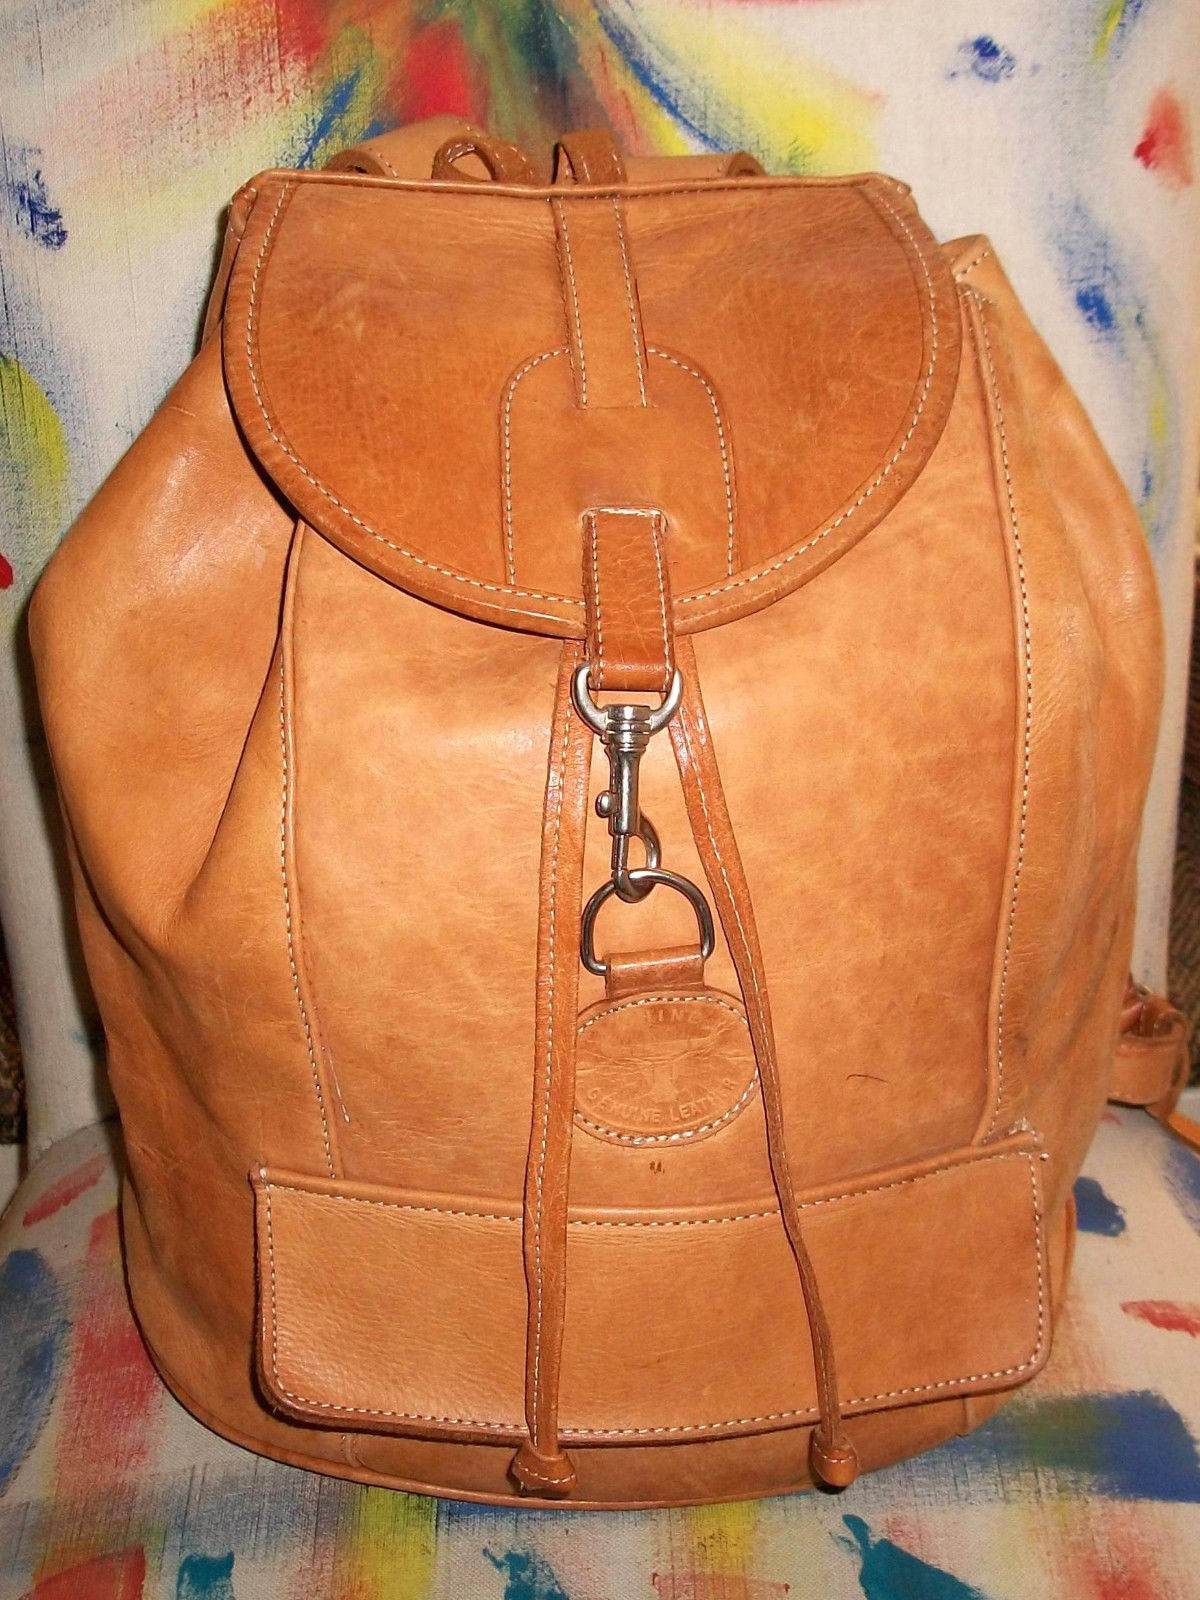 unique vintage style backpack